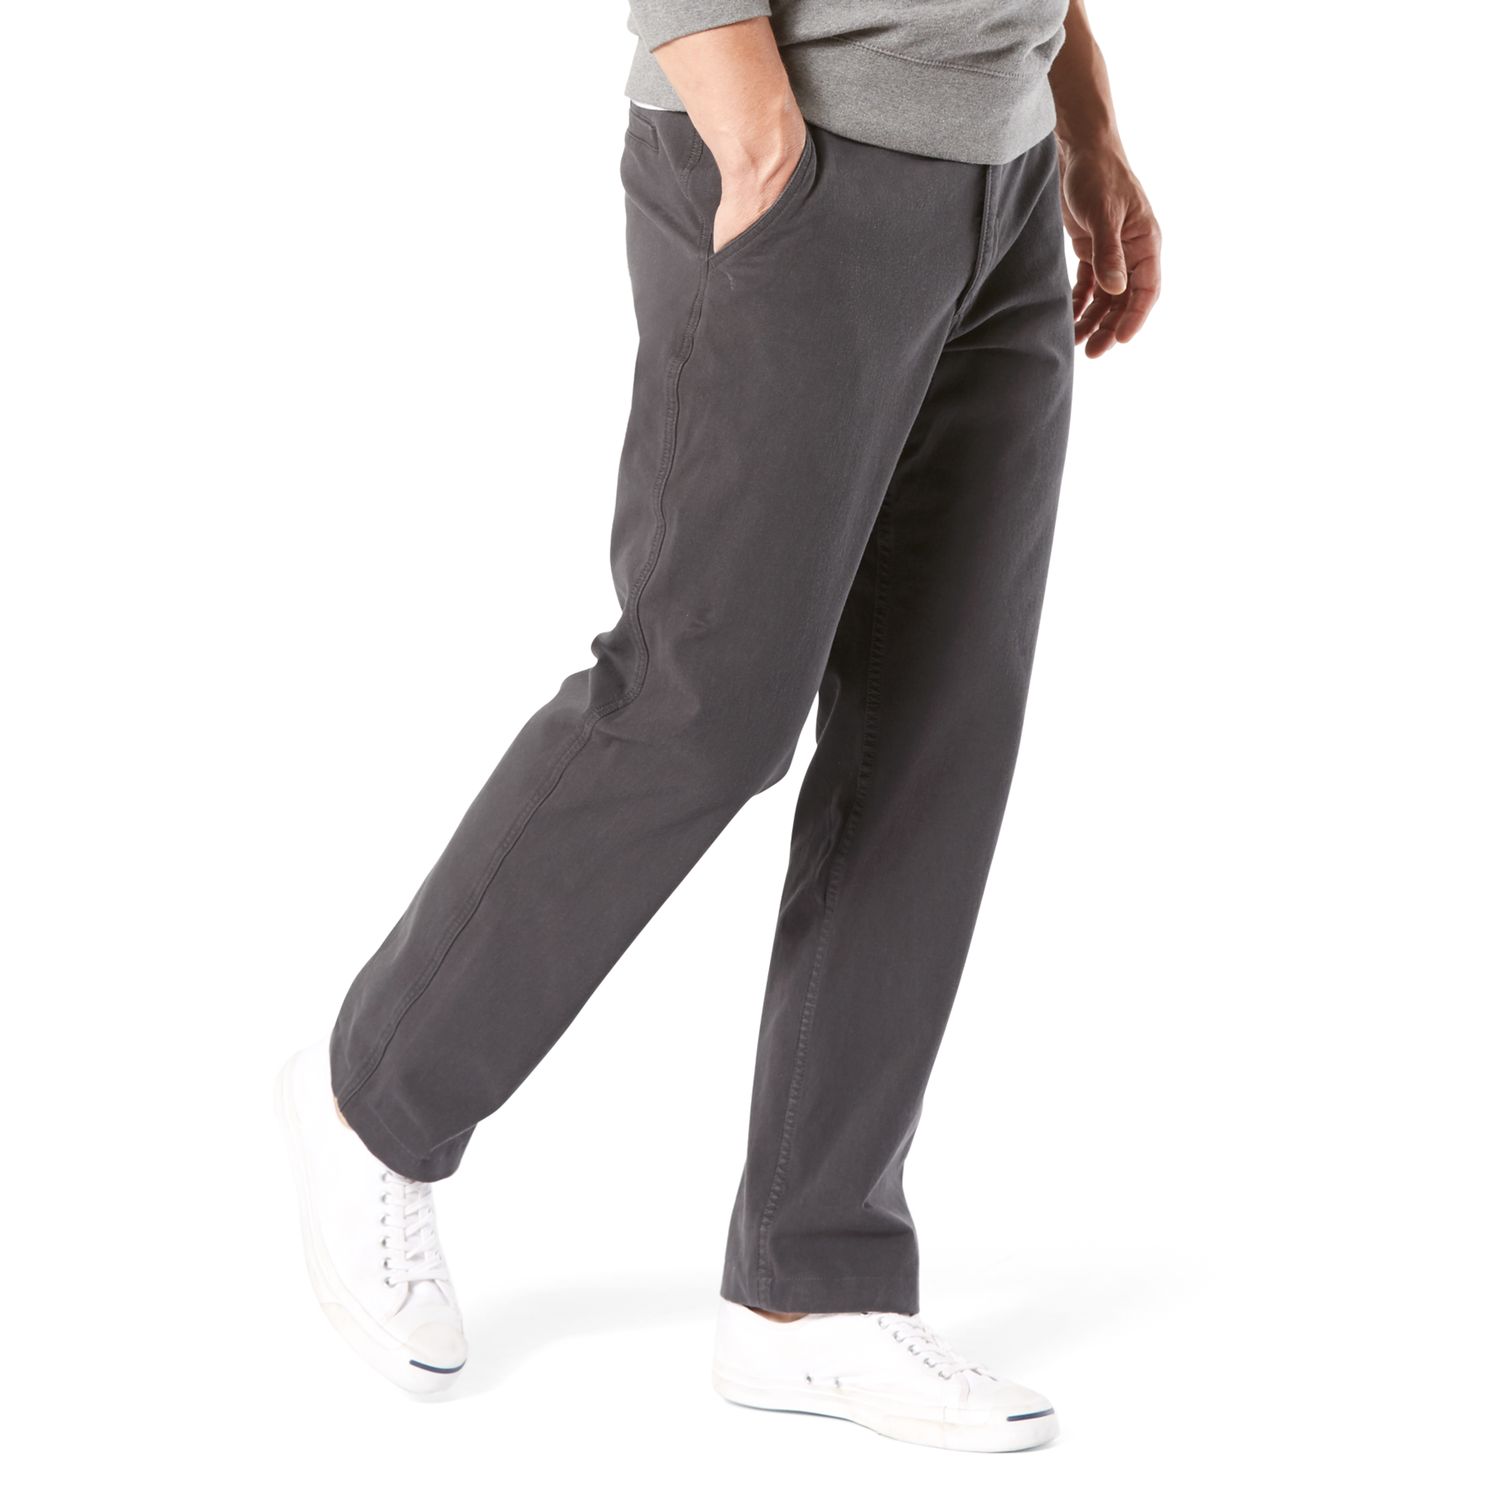 dockers men's skinny fit downtime khaki smart 360 flex pants